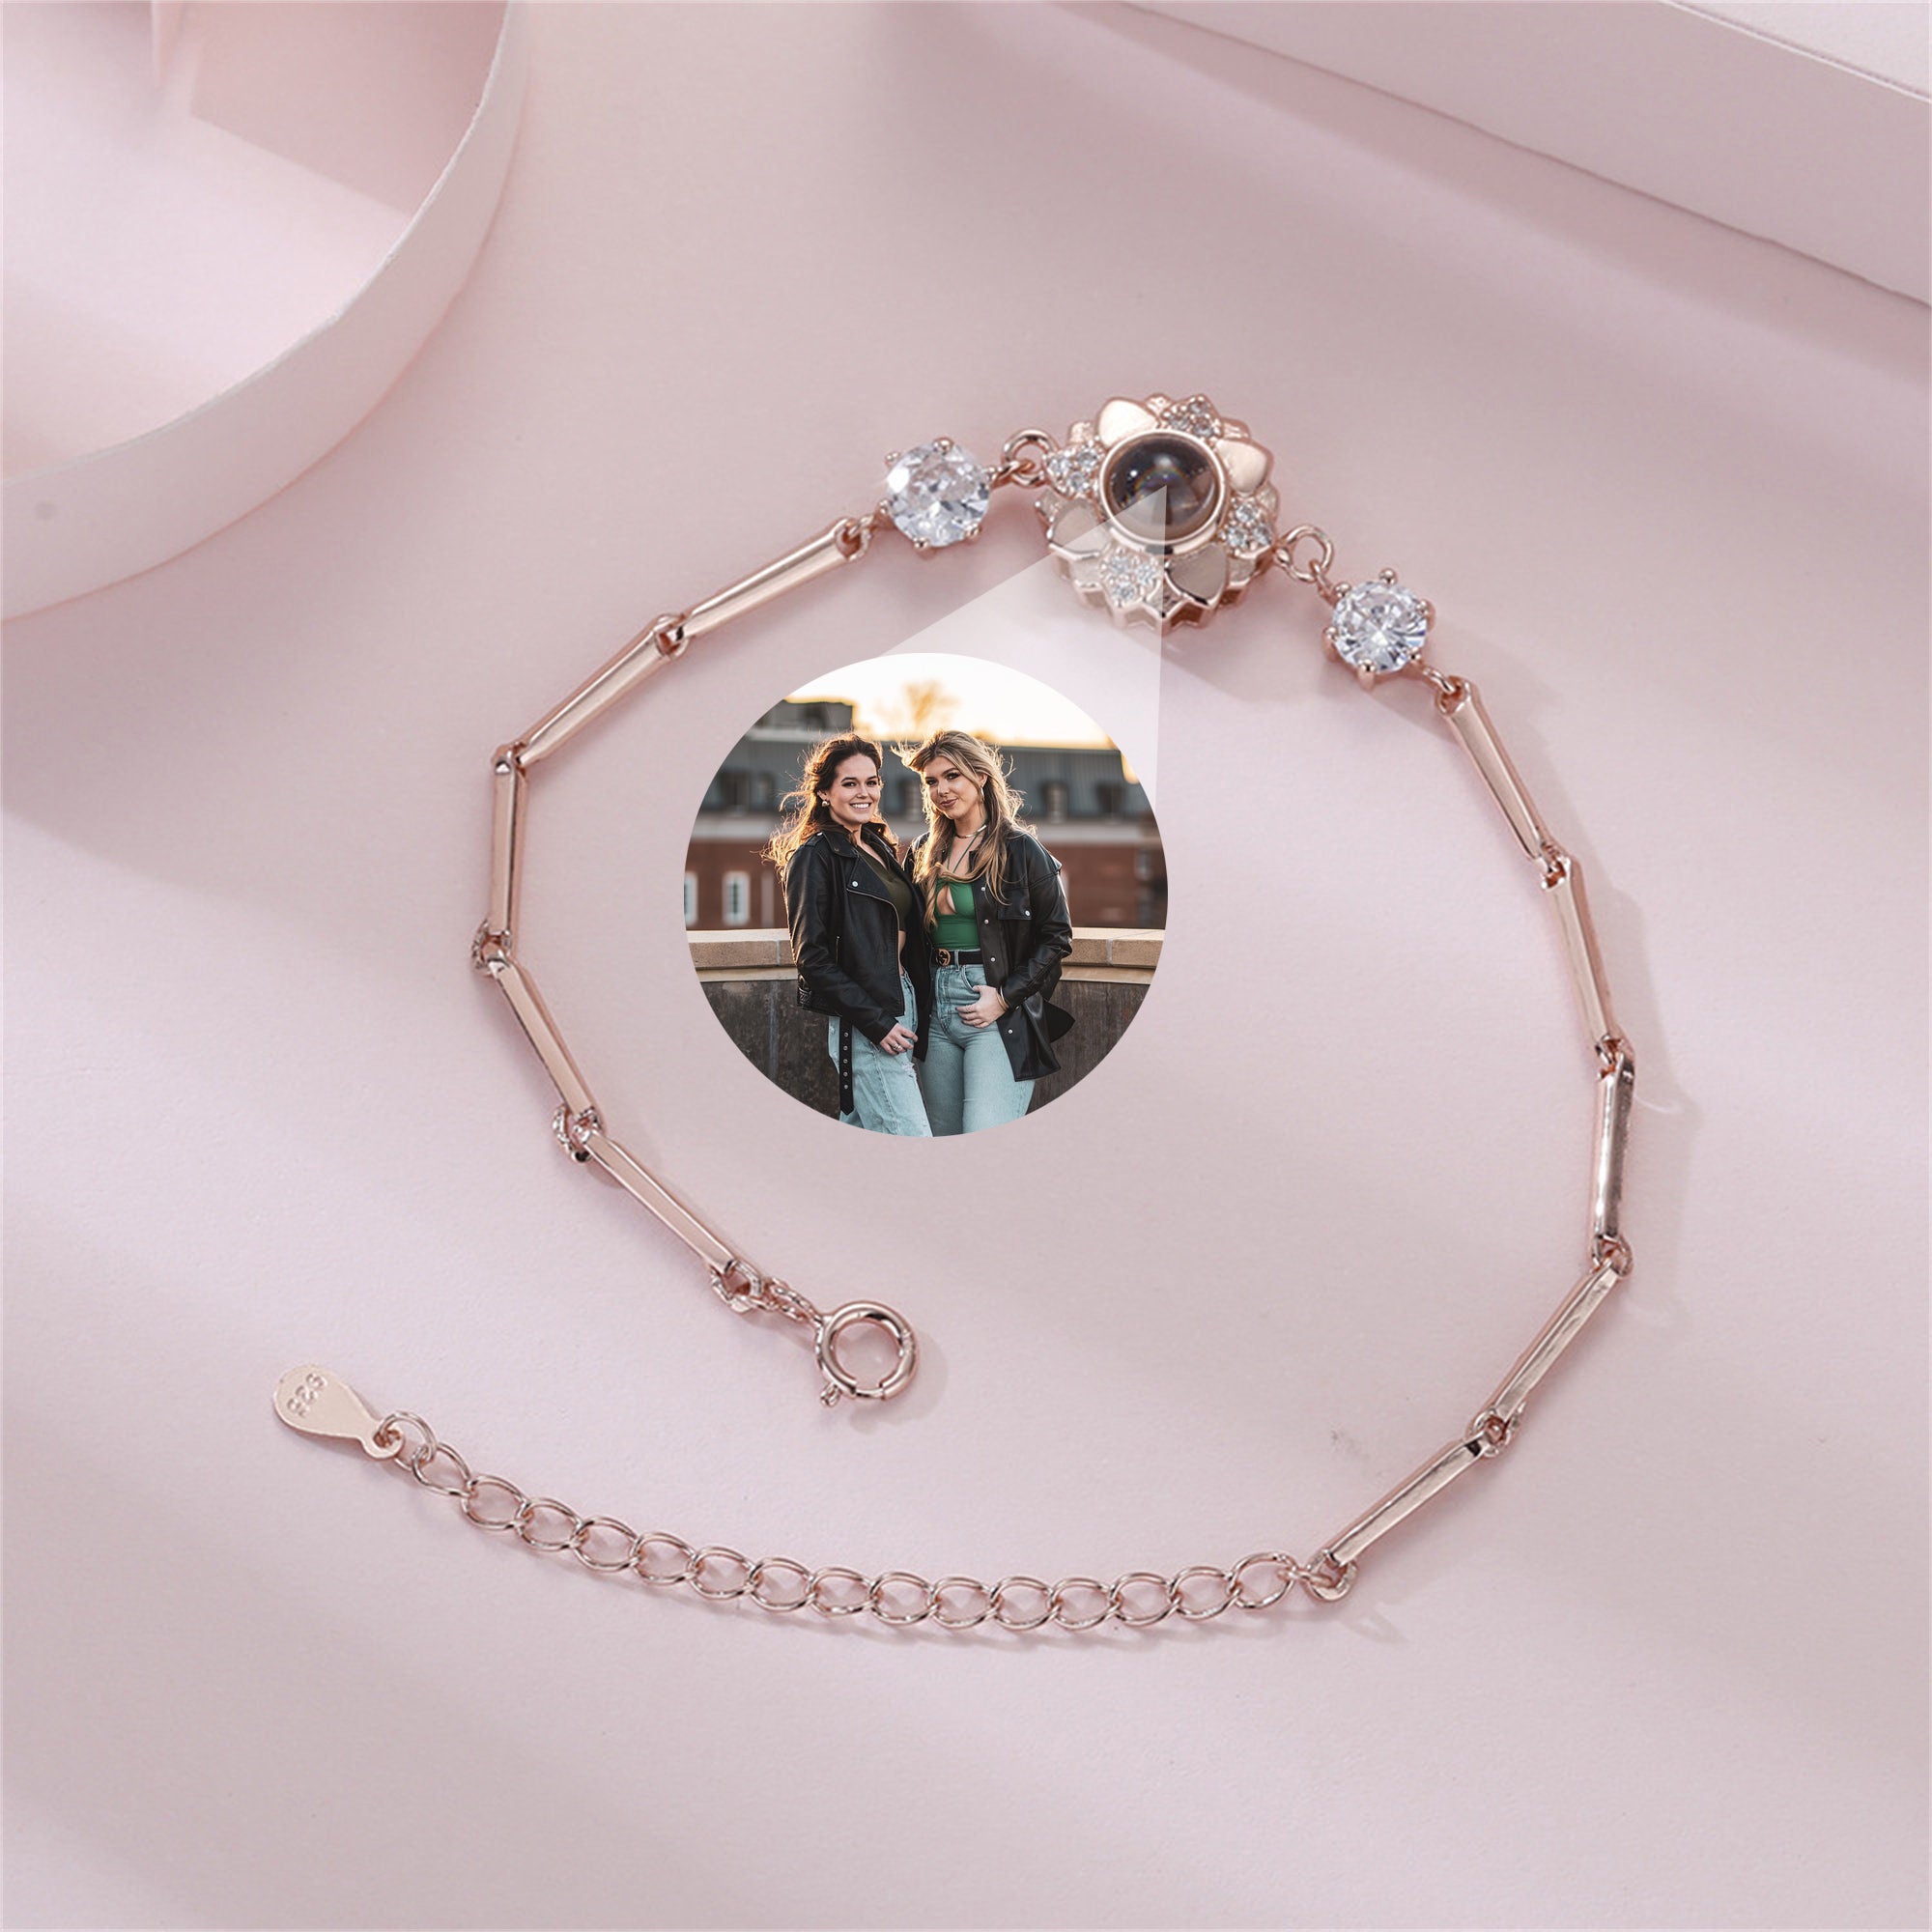 Heart Projection Bracelet, Custom Memorial Picture Jewelry, Personalized Photo Inside Bracelet